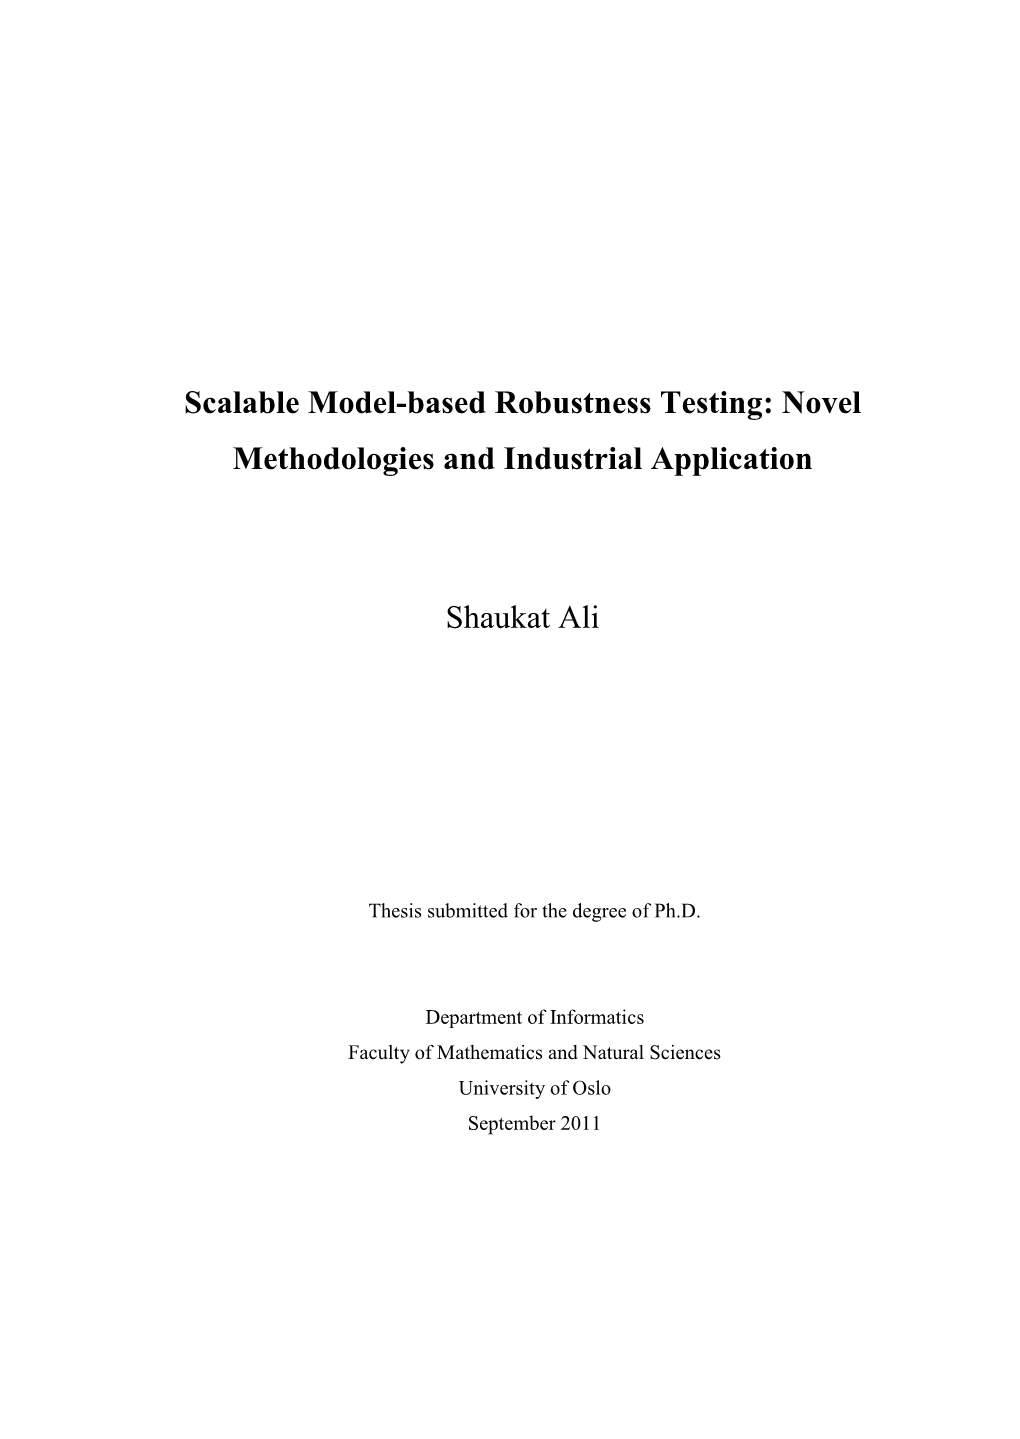 Scalable Model-Based Robustness Testing: Novel Methodologies and Industrial Application